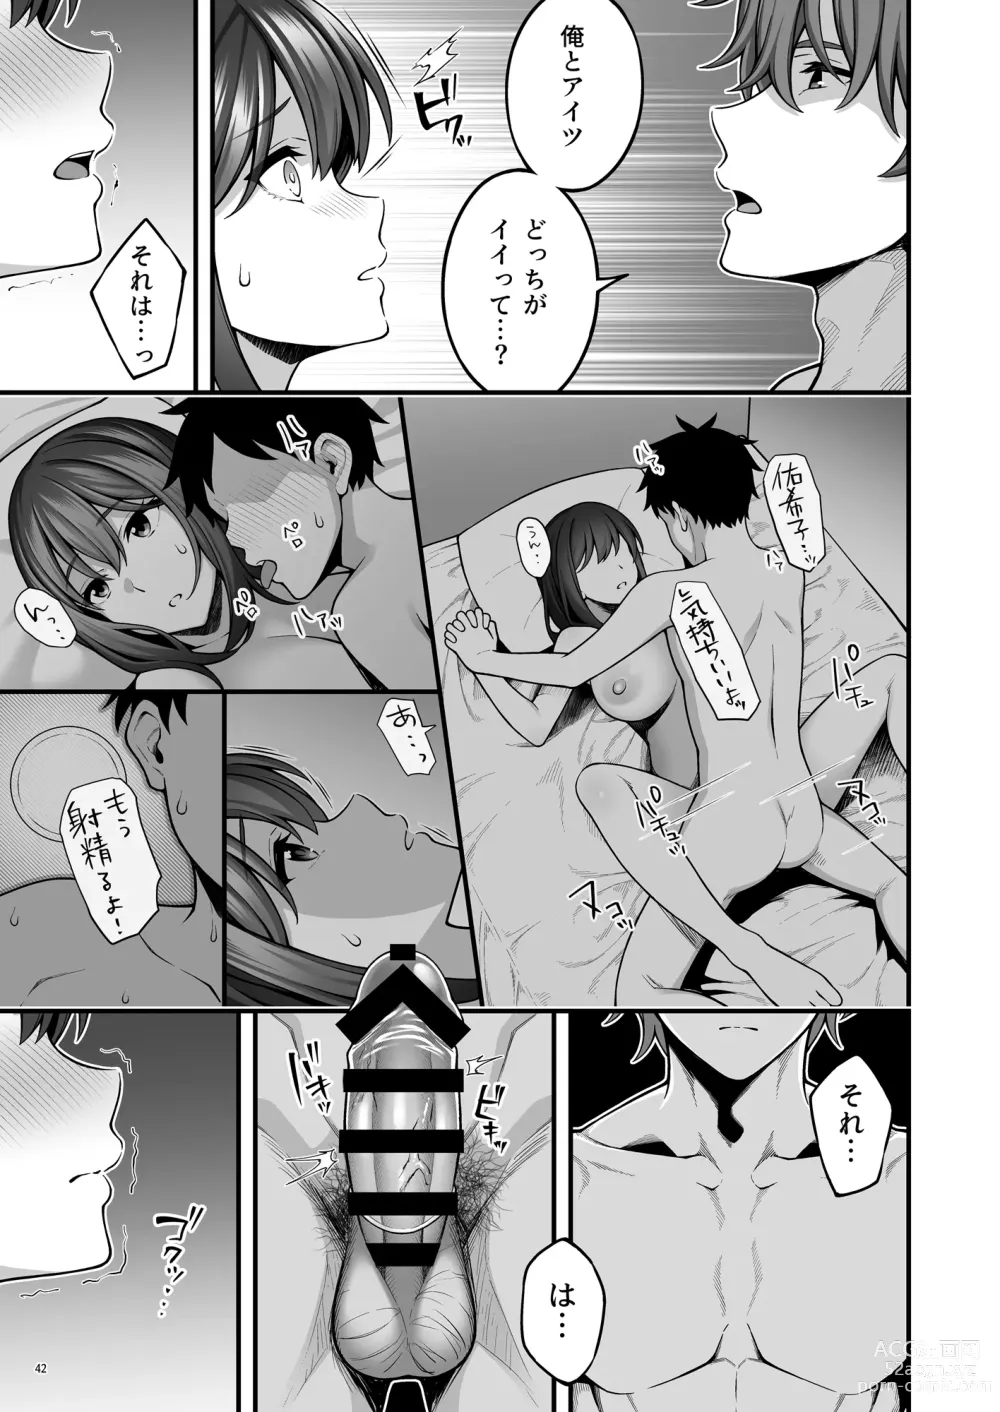 Page 43 of doujinshi 例え人妻になっても、躾けられた身体は快楽を忘れられない。